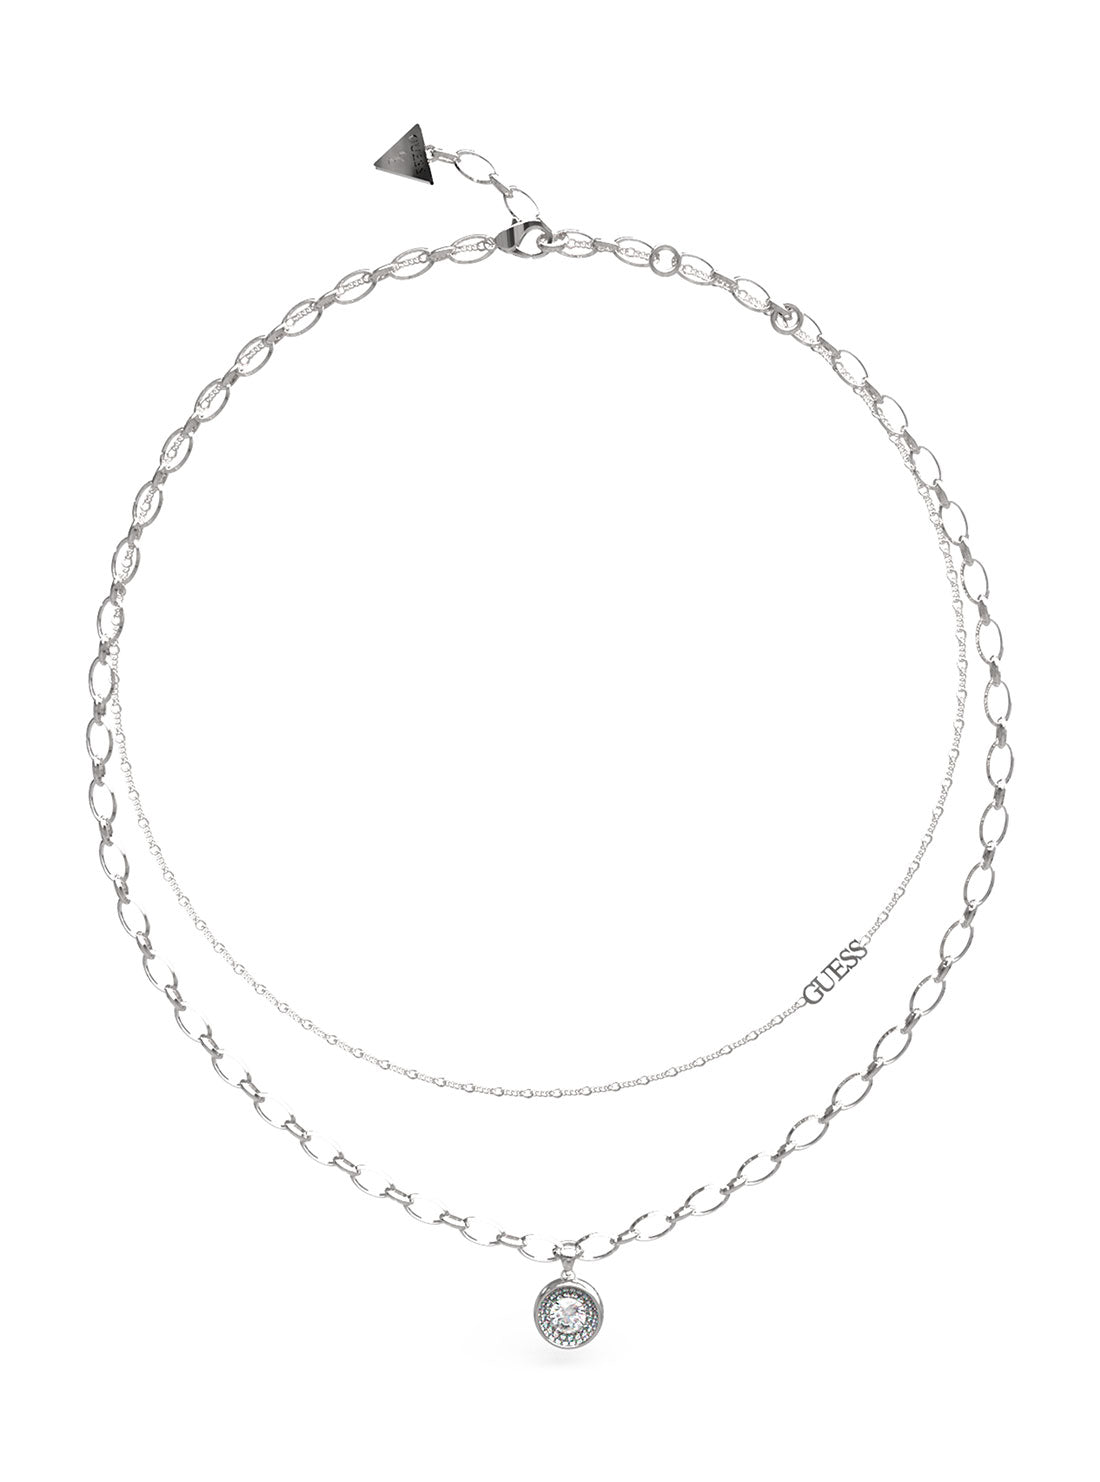 Rhodium Solitaire Double Chain Necklace